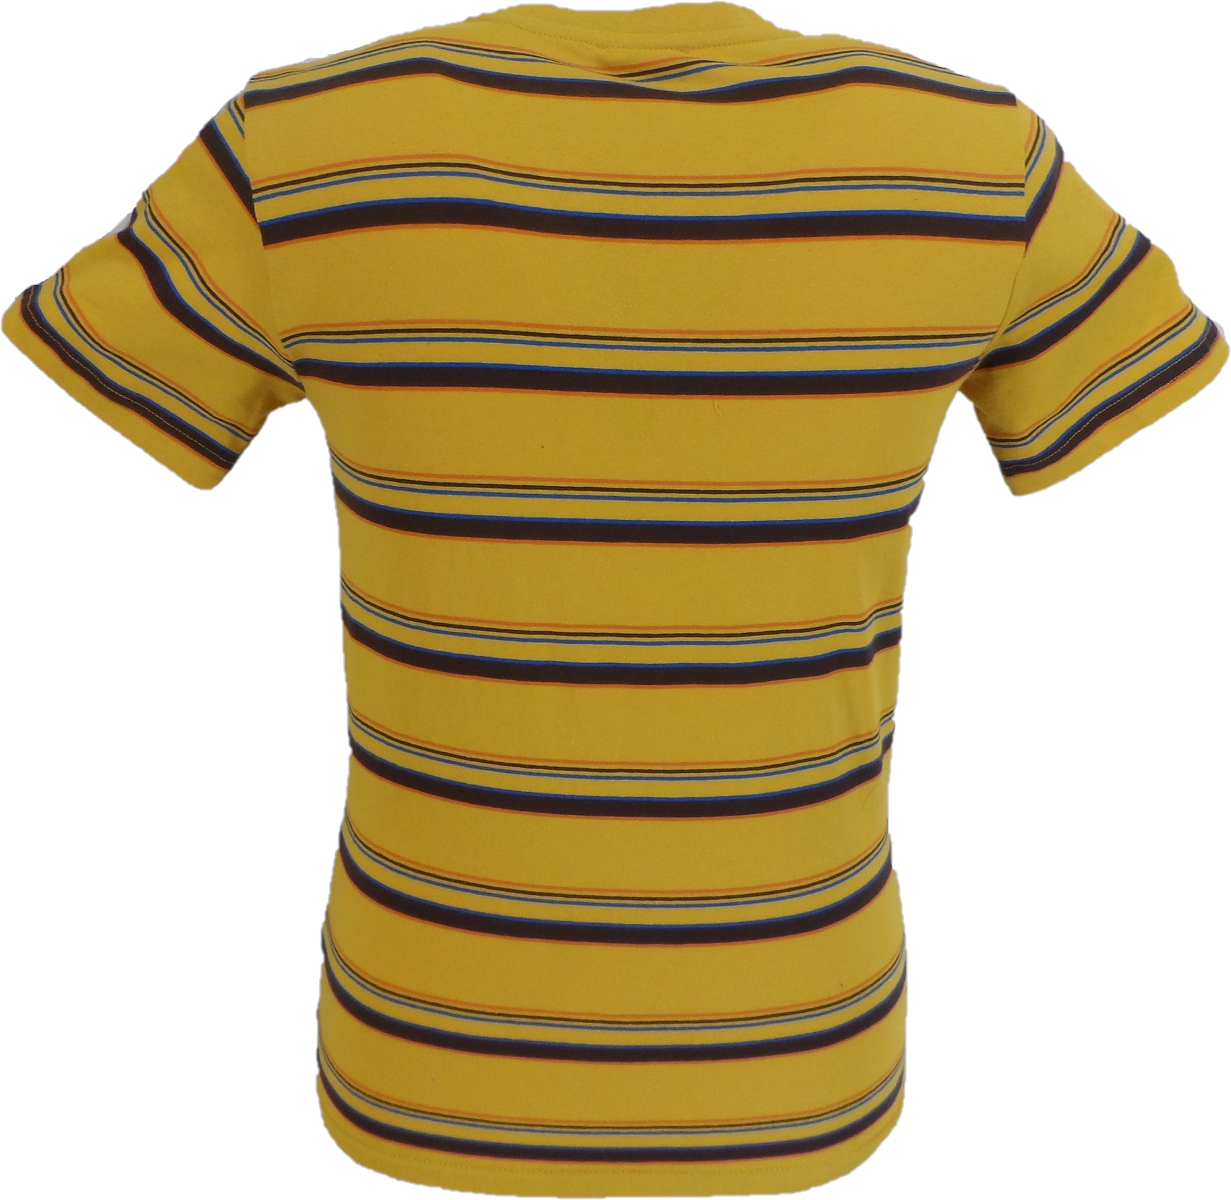 Run & Fly Mens Mustard Yellow 60s 70s Retro Mod Striped T Shirt